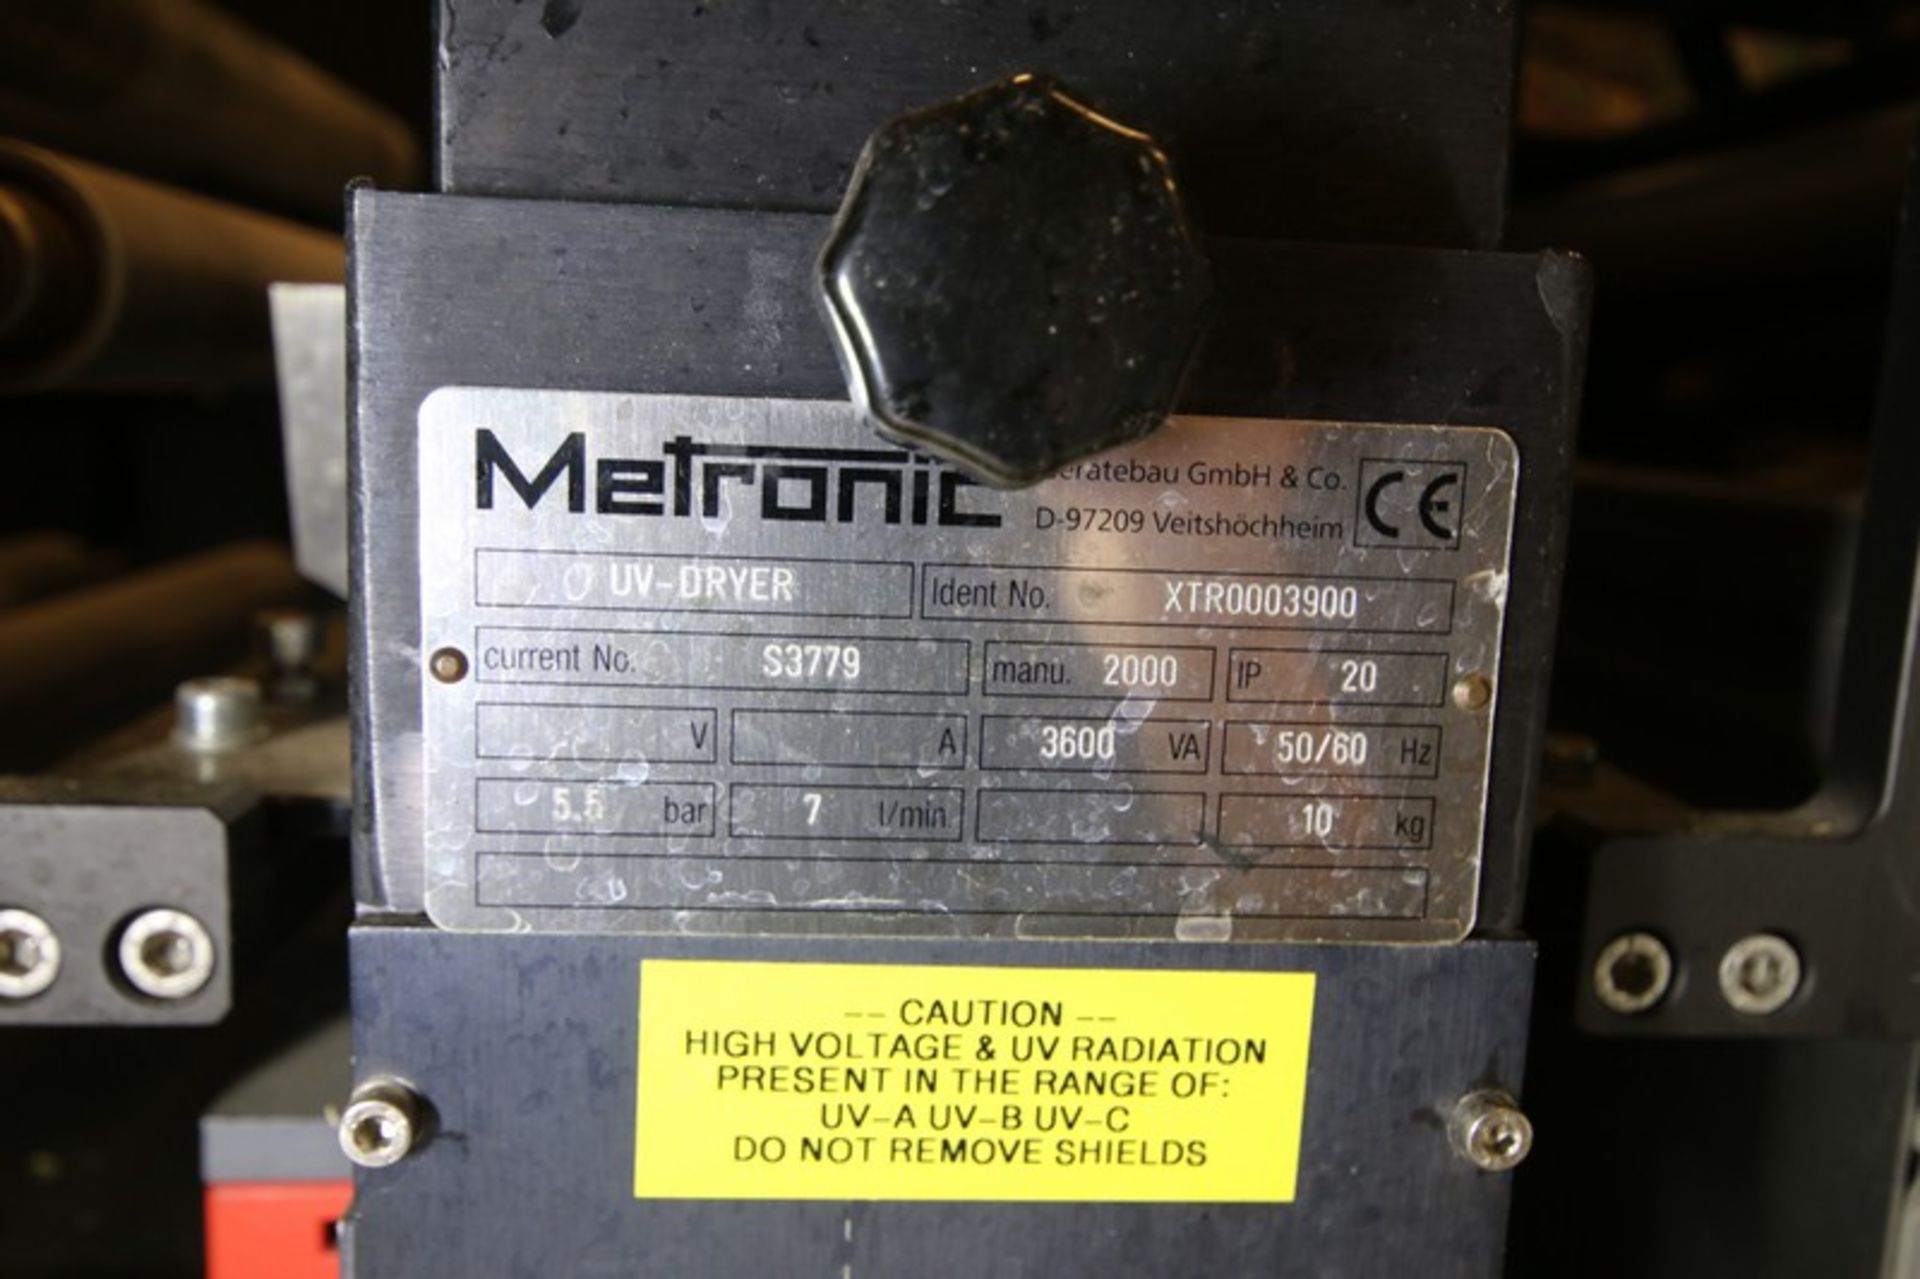 Metronic inPrint 310 UV Printer, 12" W, ID# MF831018-S018-02, with UV Dryer ID #XTR0003900, 208V, - Bild 7 aus 8